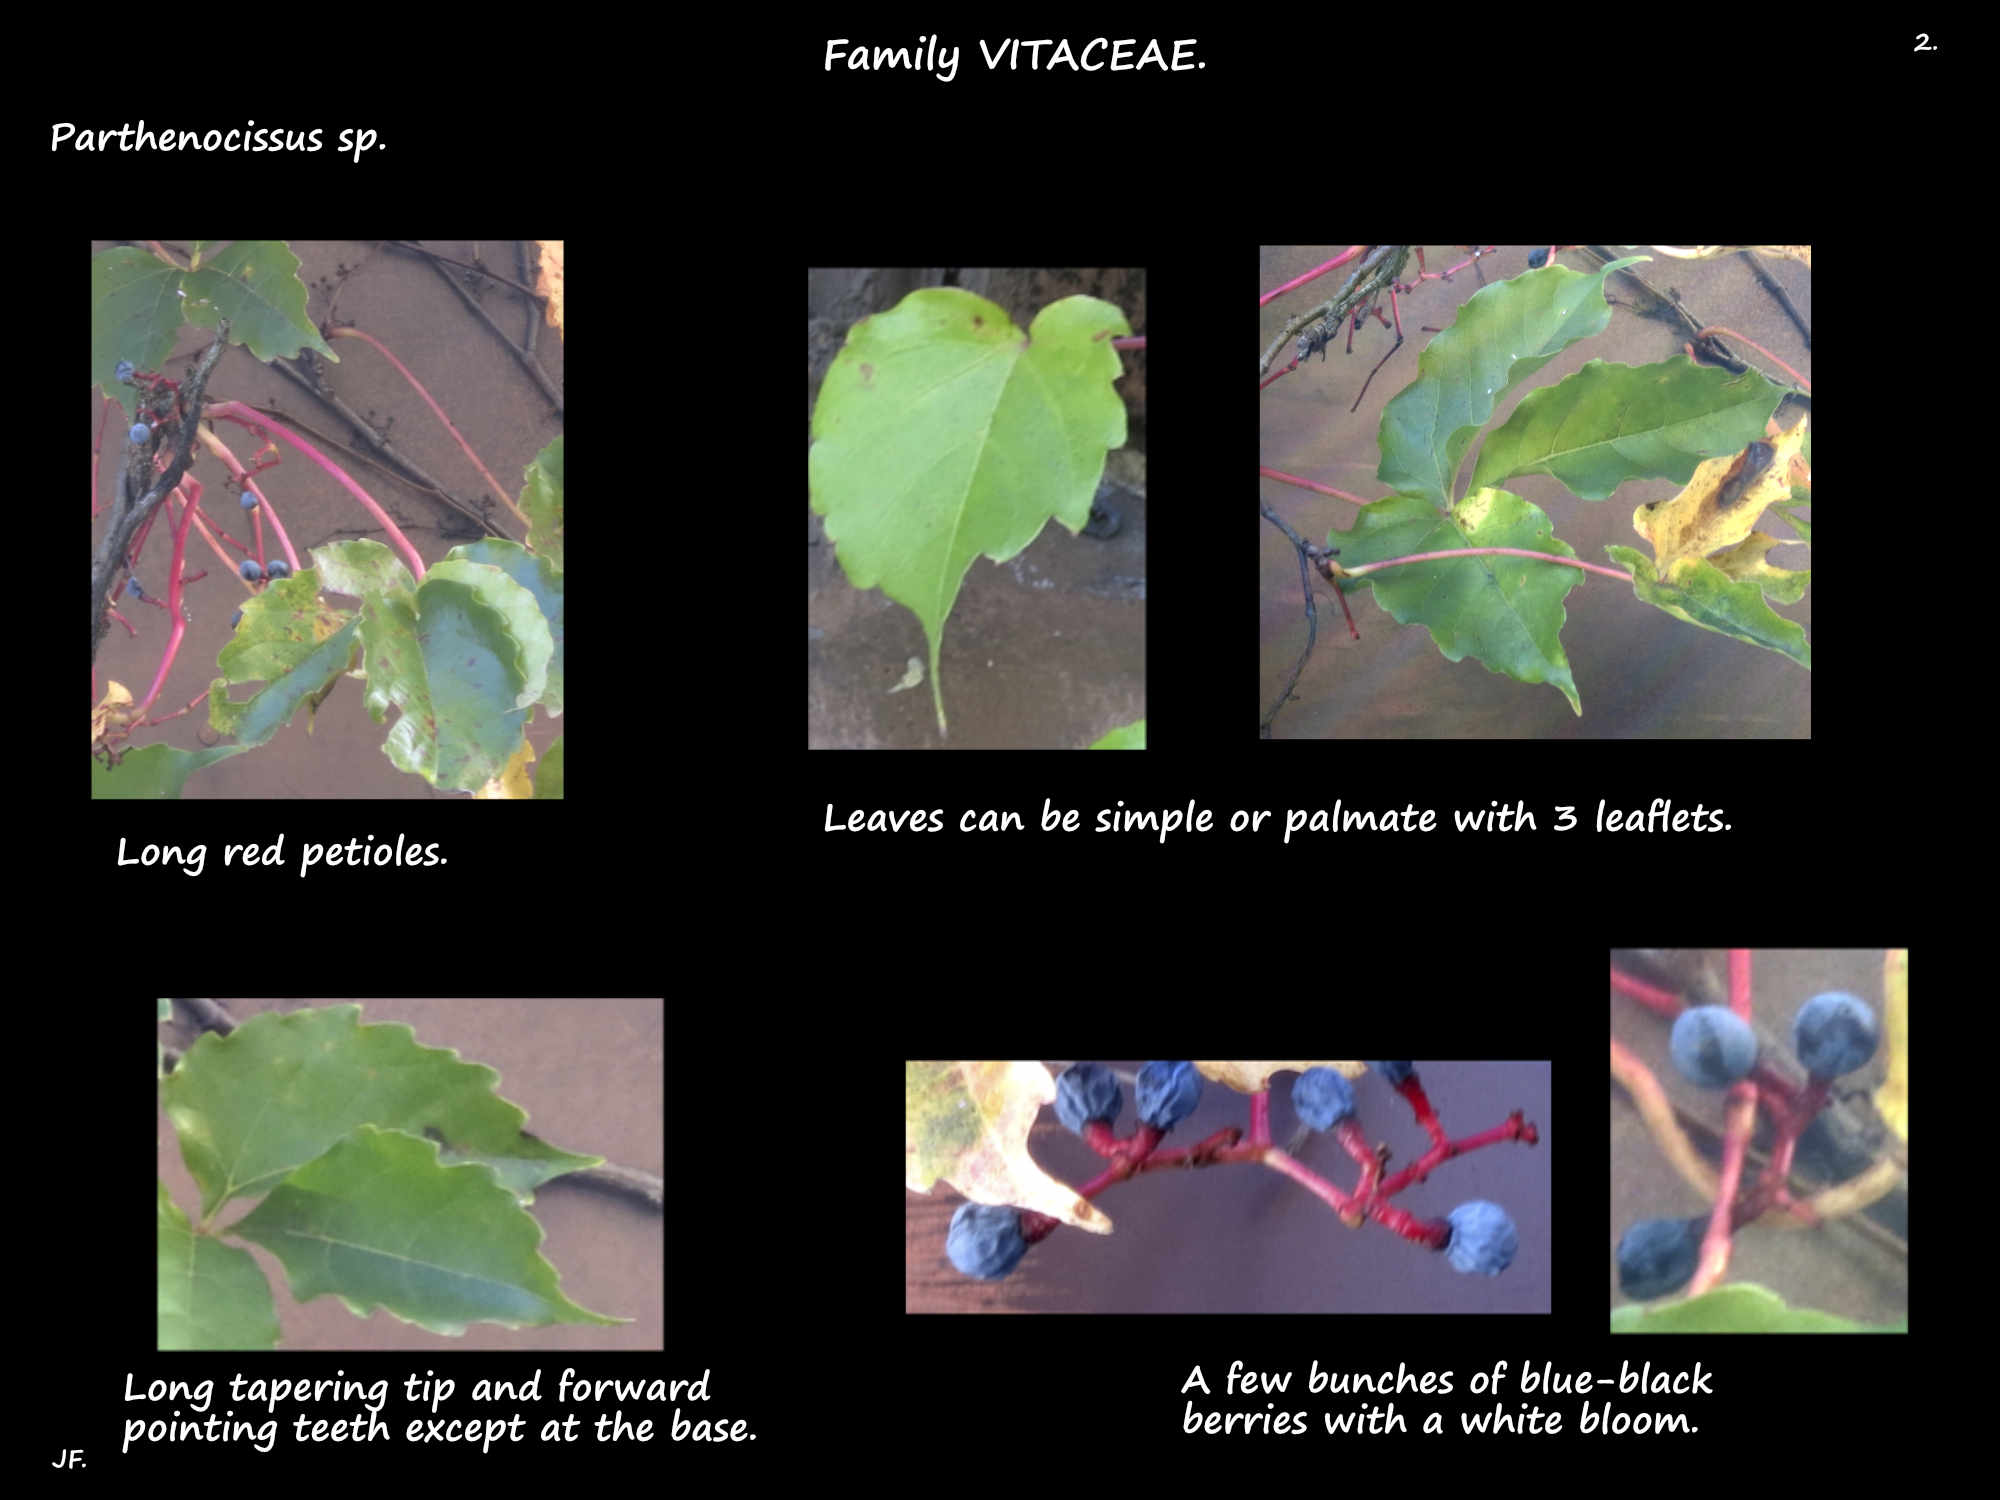 2 Simple & palmate leaves, & berries of a Parthenocissis vine